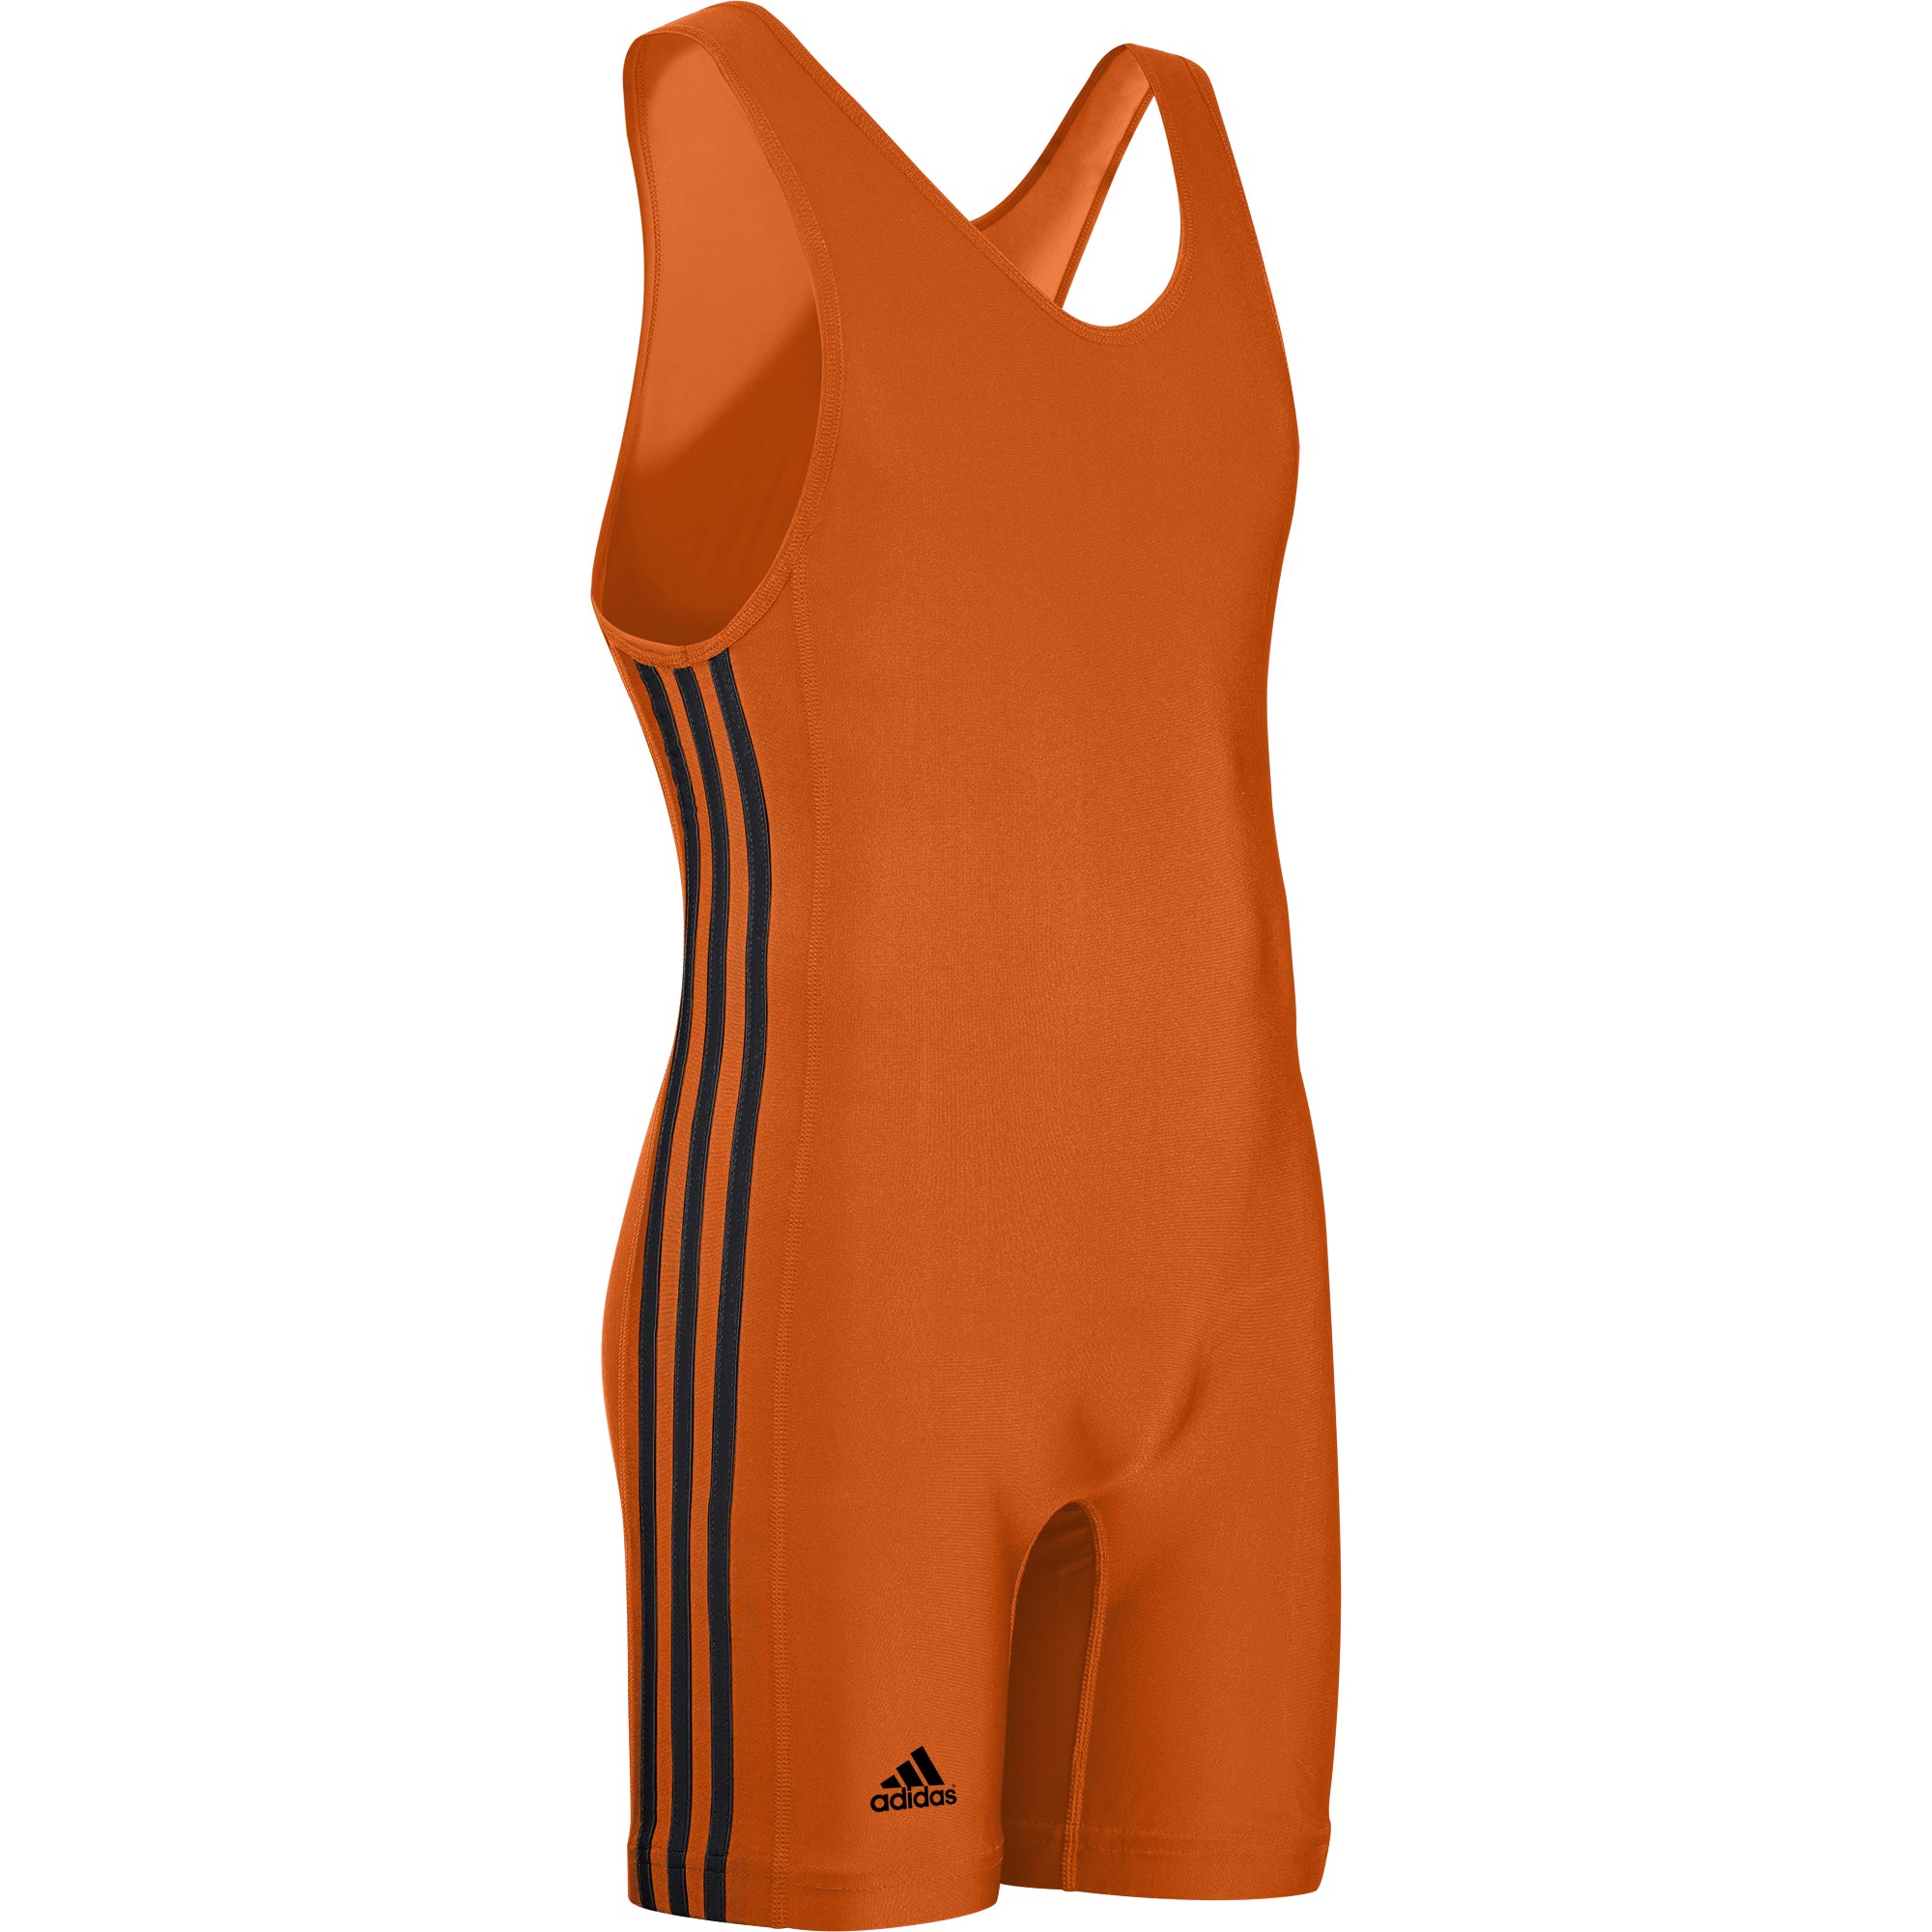 Adidas Solid Wrestling Singlet Orange